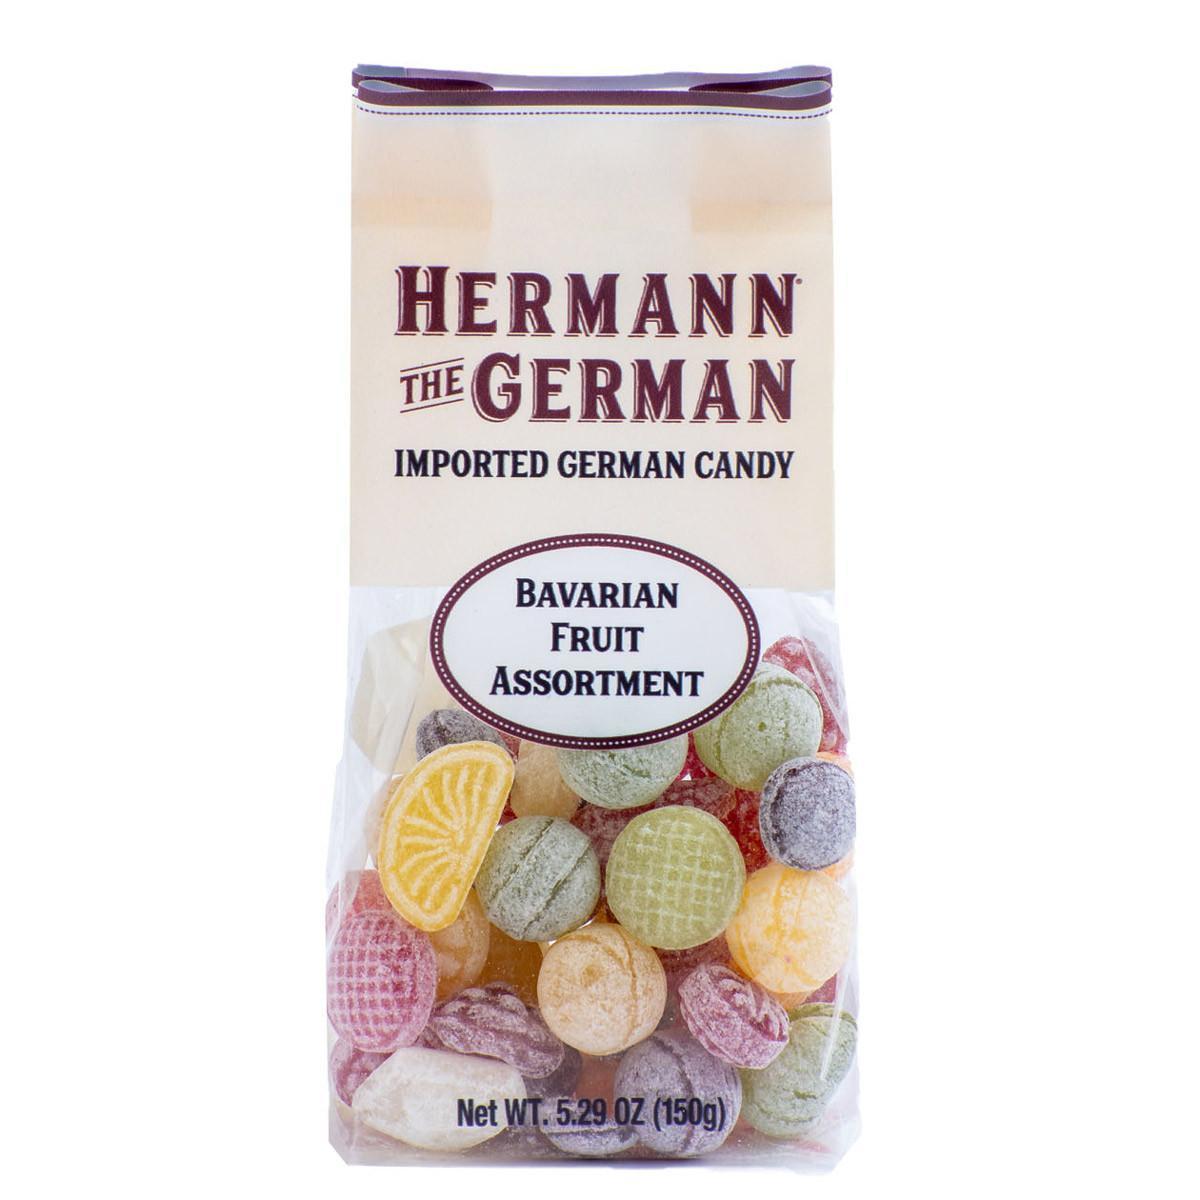 Hermann the German Bavarian Fruit Hard Candy